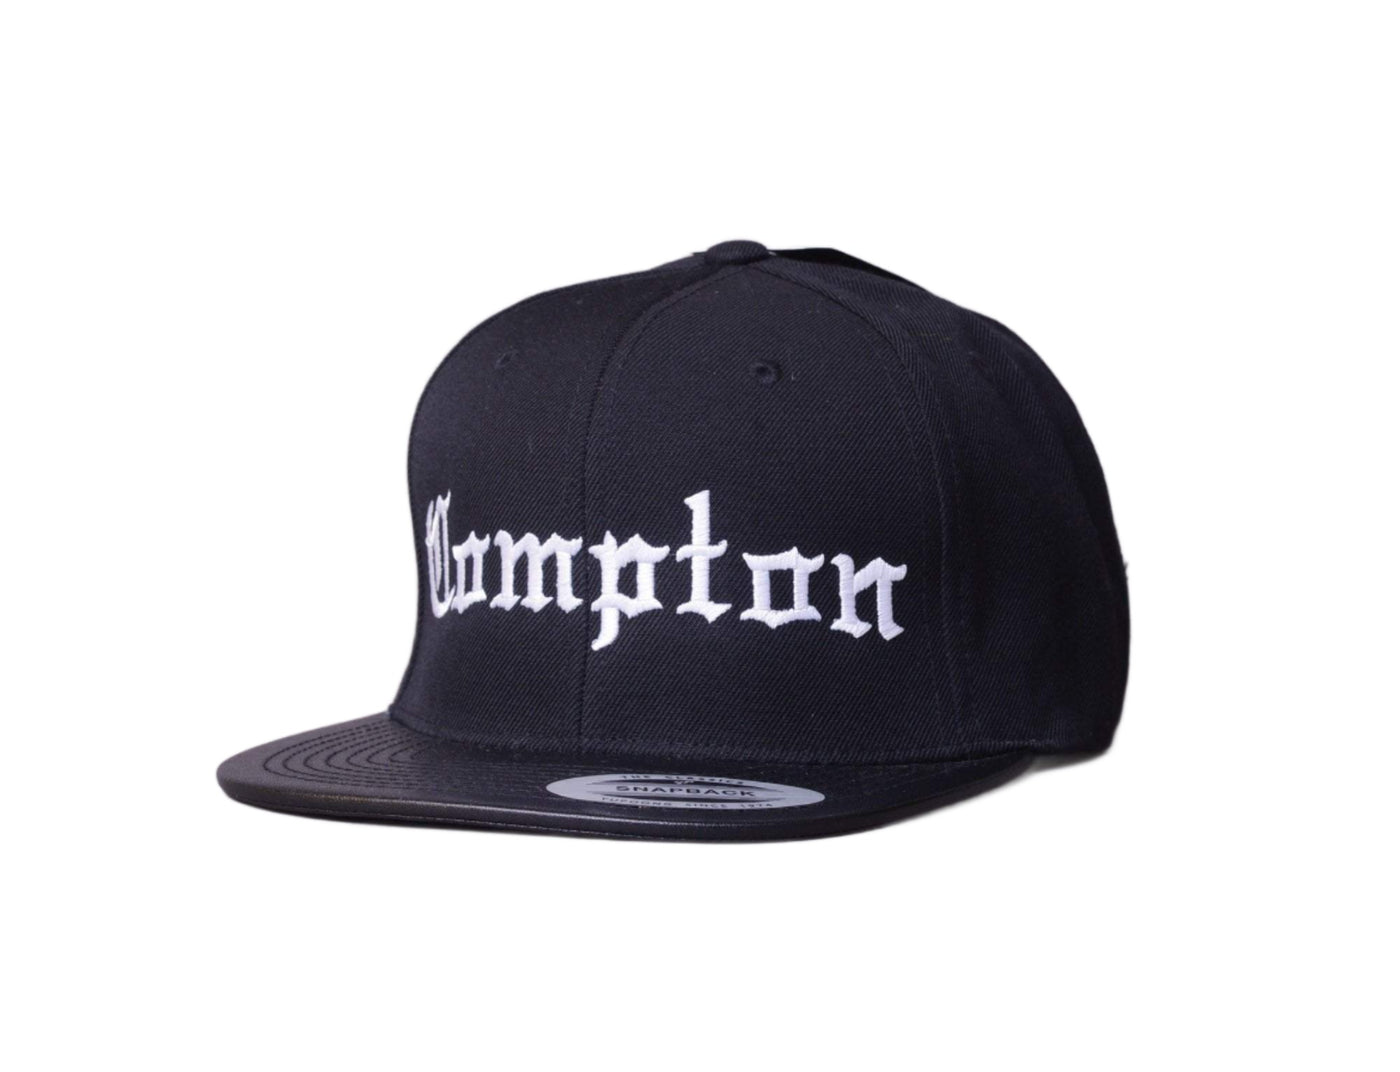 Cap Snapback Compton Black "Leather Visor" LOKK Snapback Cap / Black / One Size